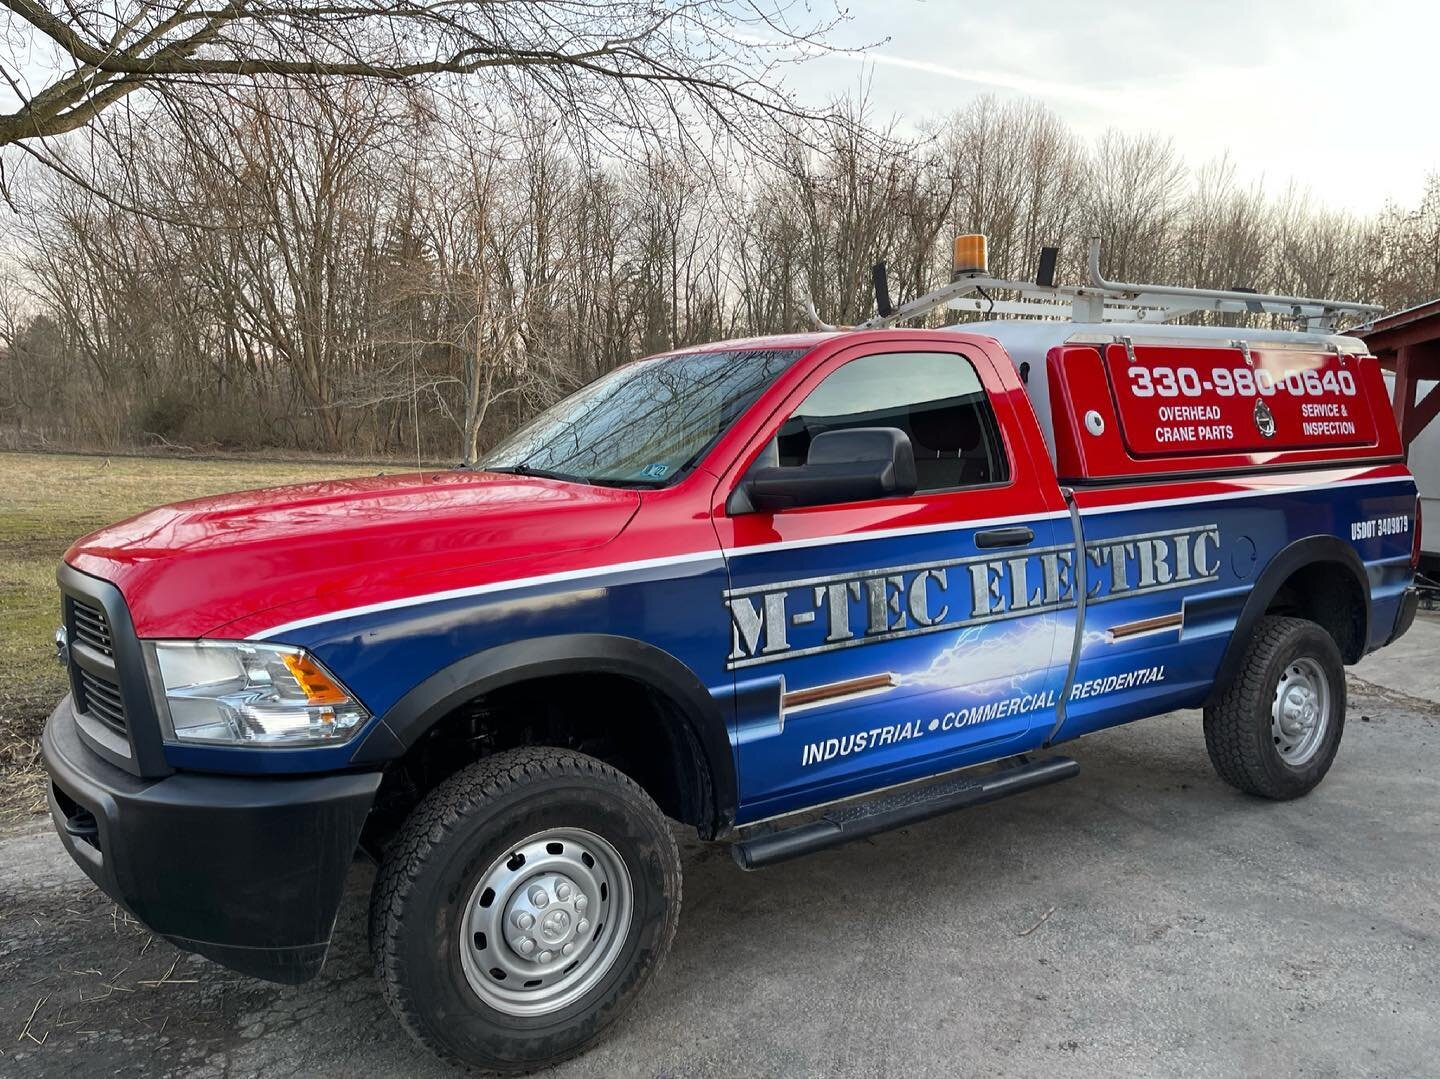 New service truck! #mtec #overheadcrane #inspections #electrician #industry